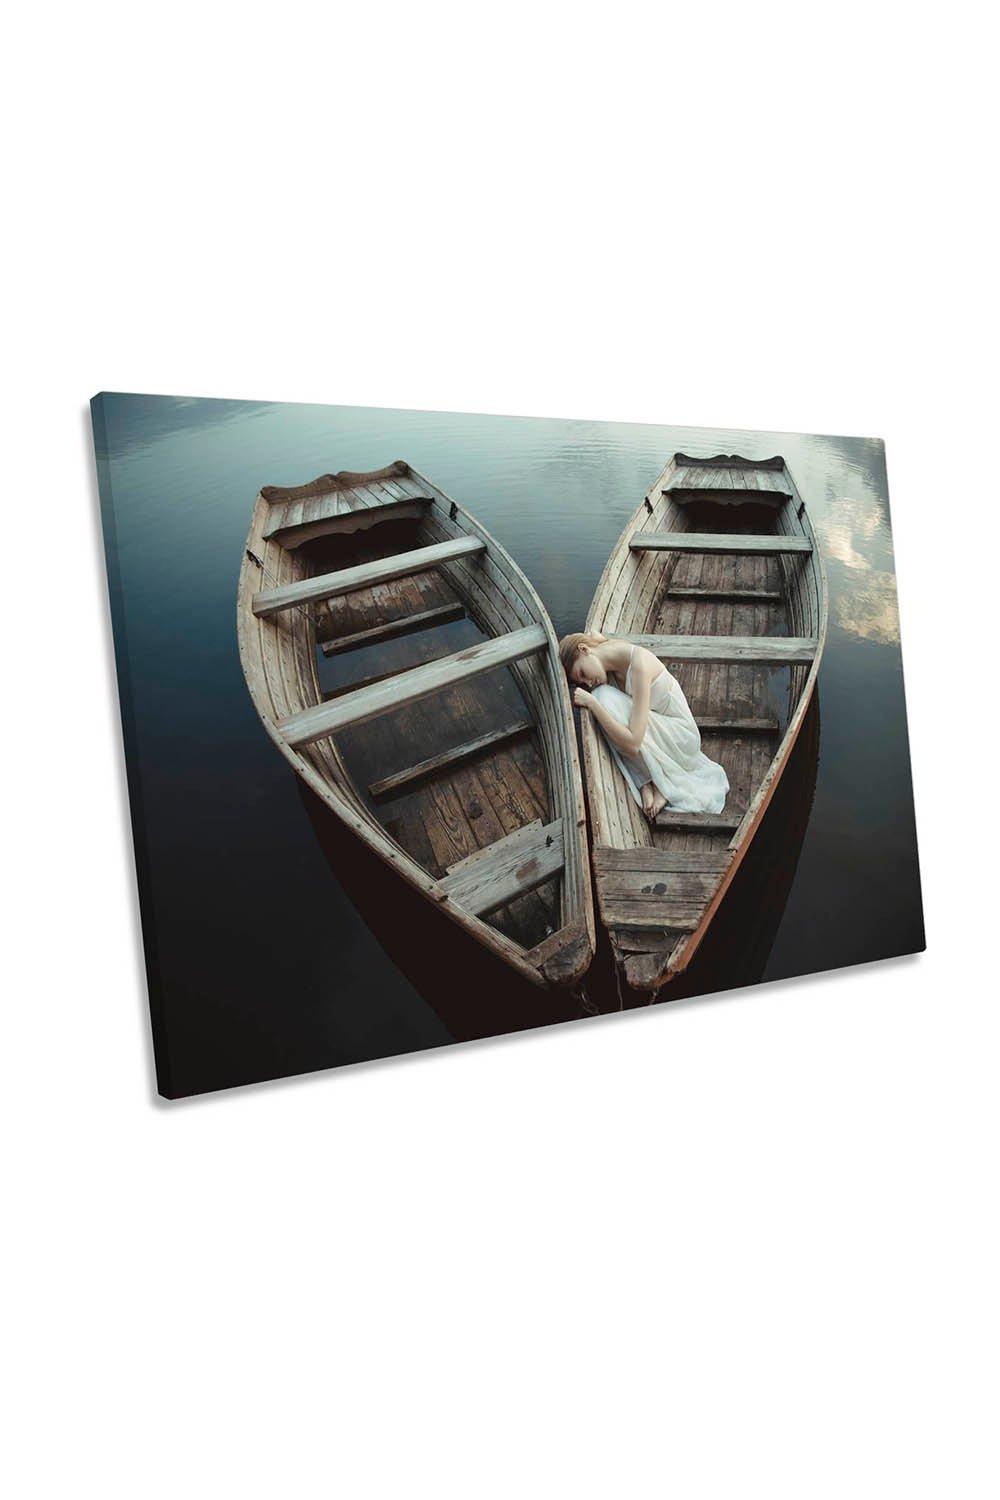 Sleeping Beauty Boats Modern Canvas Wall Art Picture Print